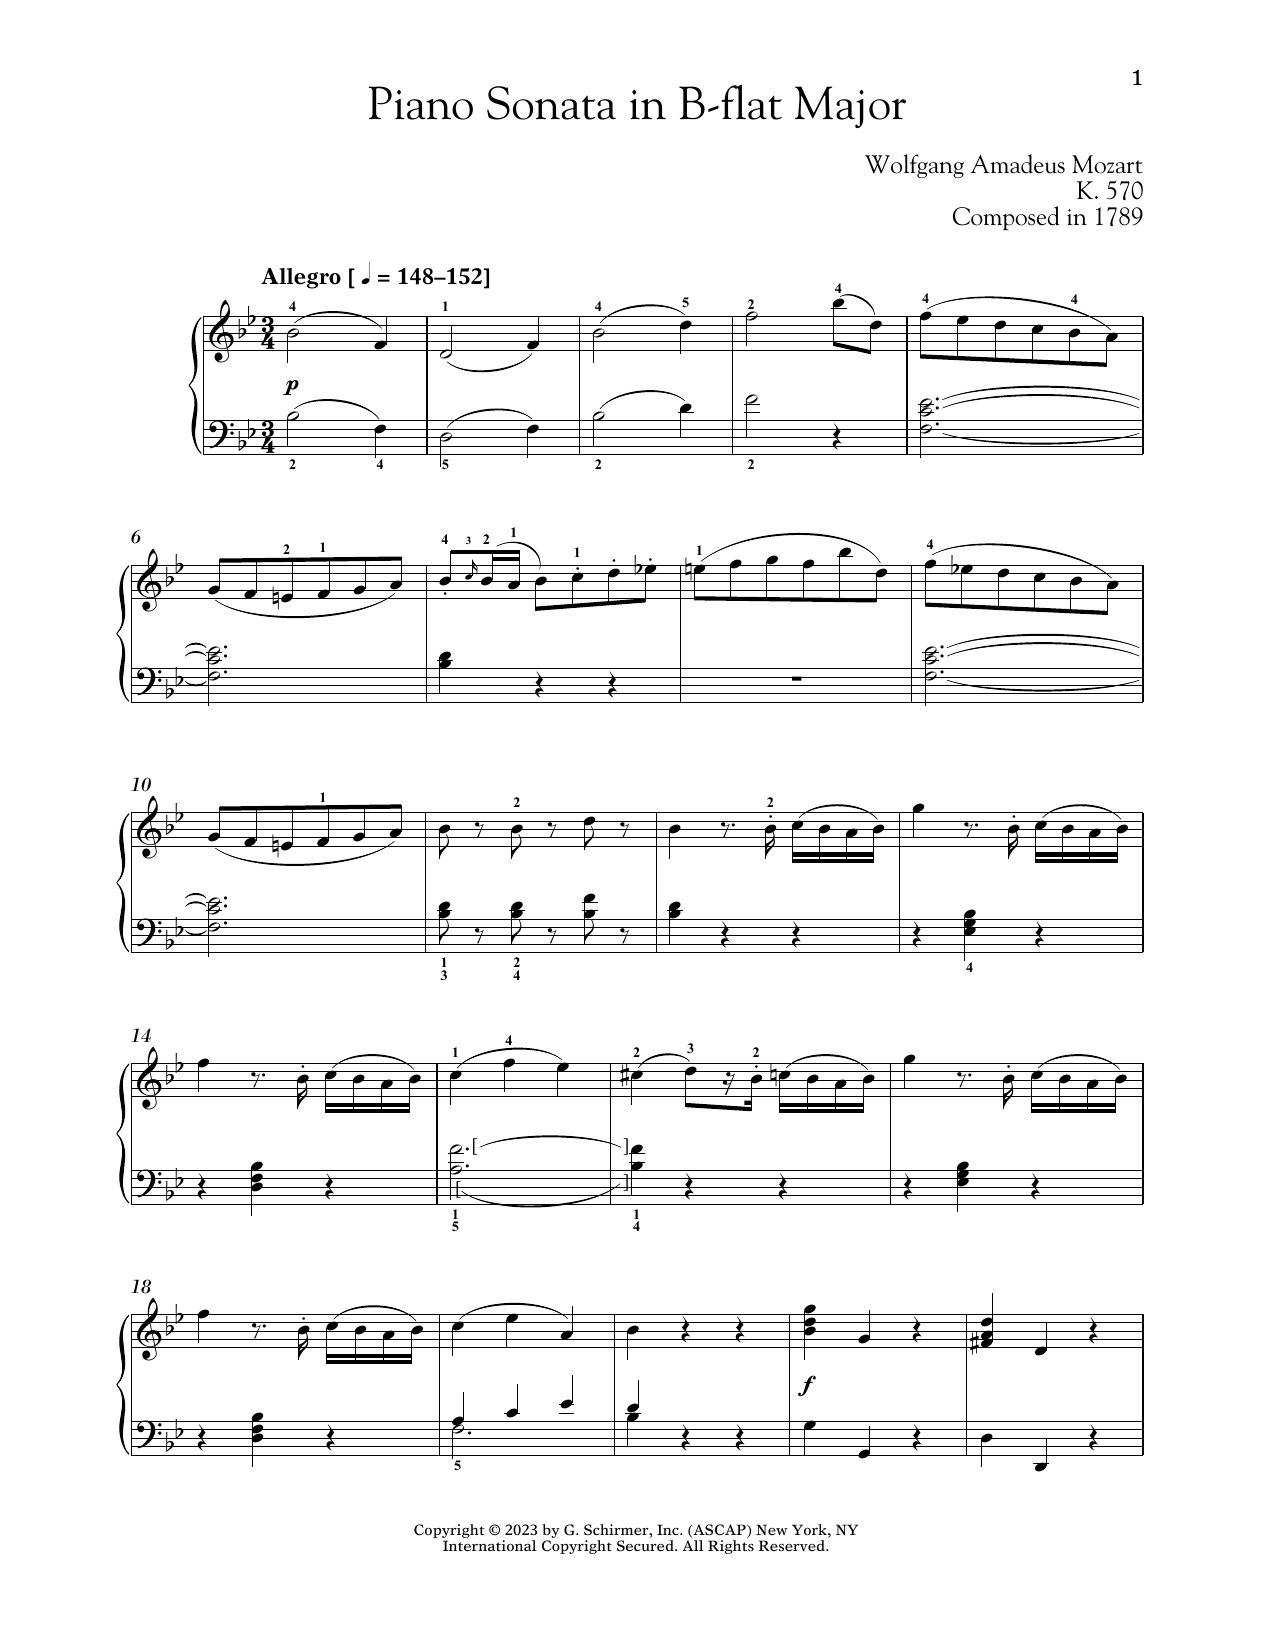 Wolfgang Amadeus Mozart Piano Sonata In B-flat Major, K. 570 Sheet Music Notes & Chords for Piano Solo - Download or Print PDF